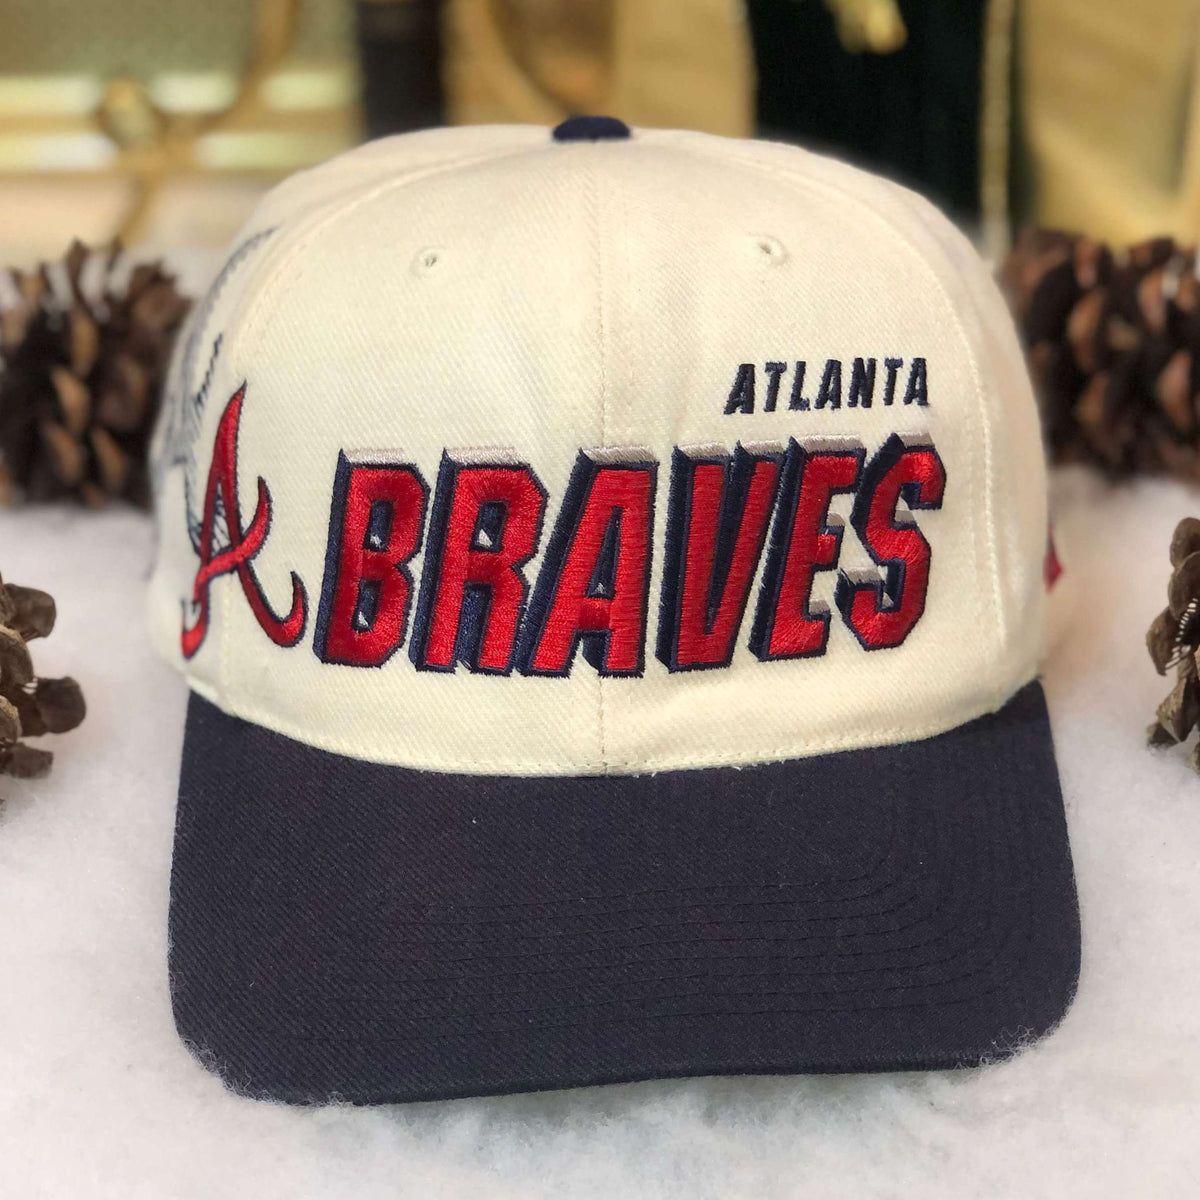 atlanta braves jersey  Atlanta Braves Jerseys ,MLB Store, Braves  Apparel, Baseball Jerseys, Hats, MLB Braves Merchandise Atlanta Braves  warrior-Atlanta Braves Jerseys ,MLB Store, Braves Apparel, Baseball Jerseys,  Hats, MLB Braves Merchandise